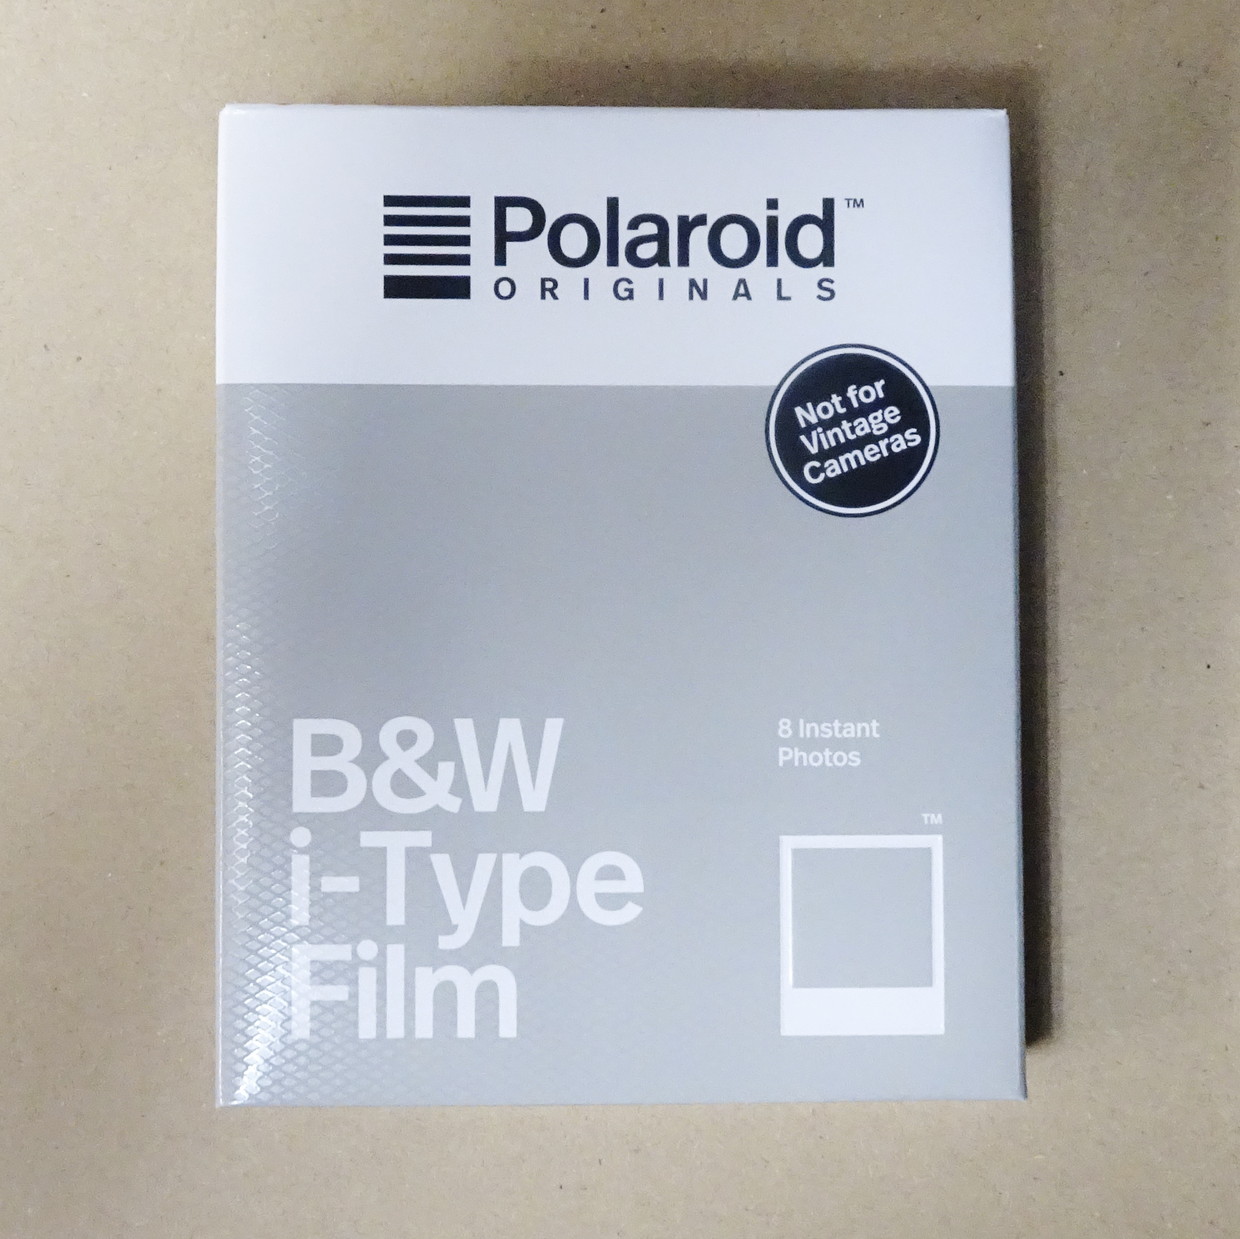 SITE BAY Polaroid B&W i-Type film